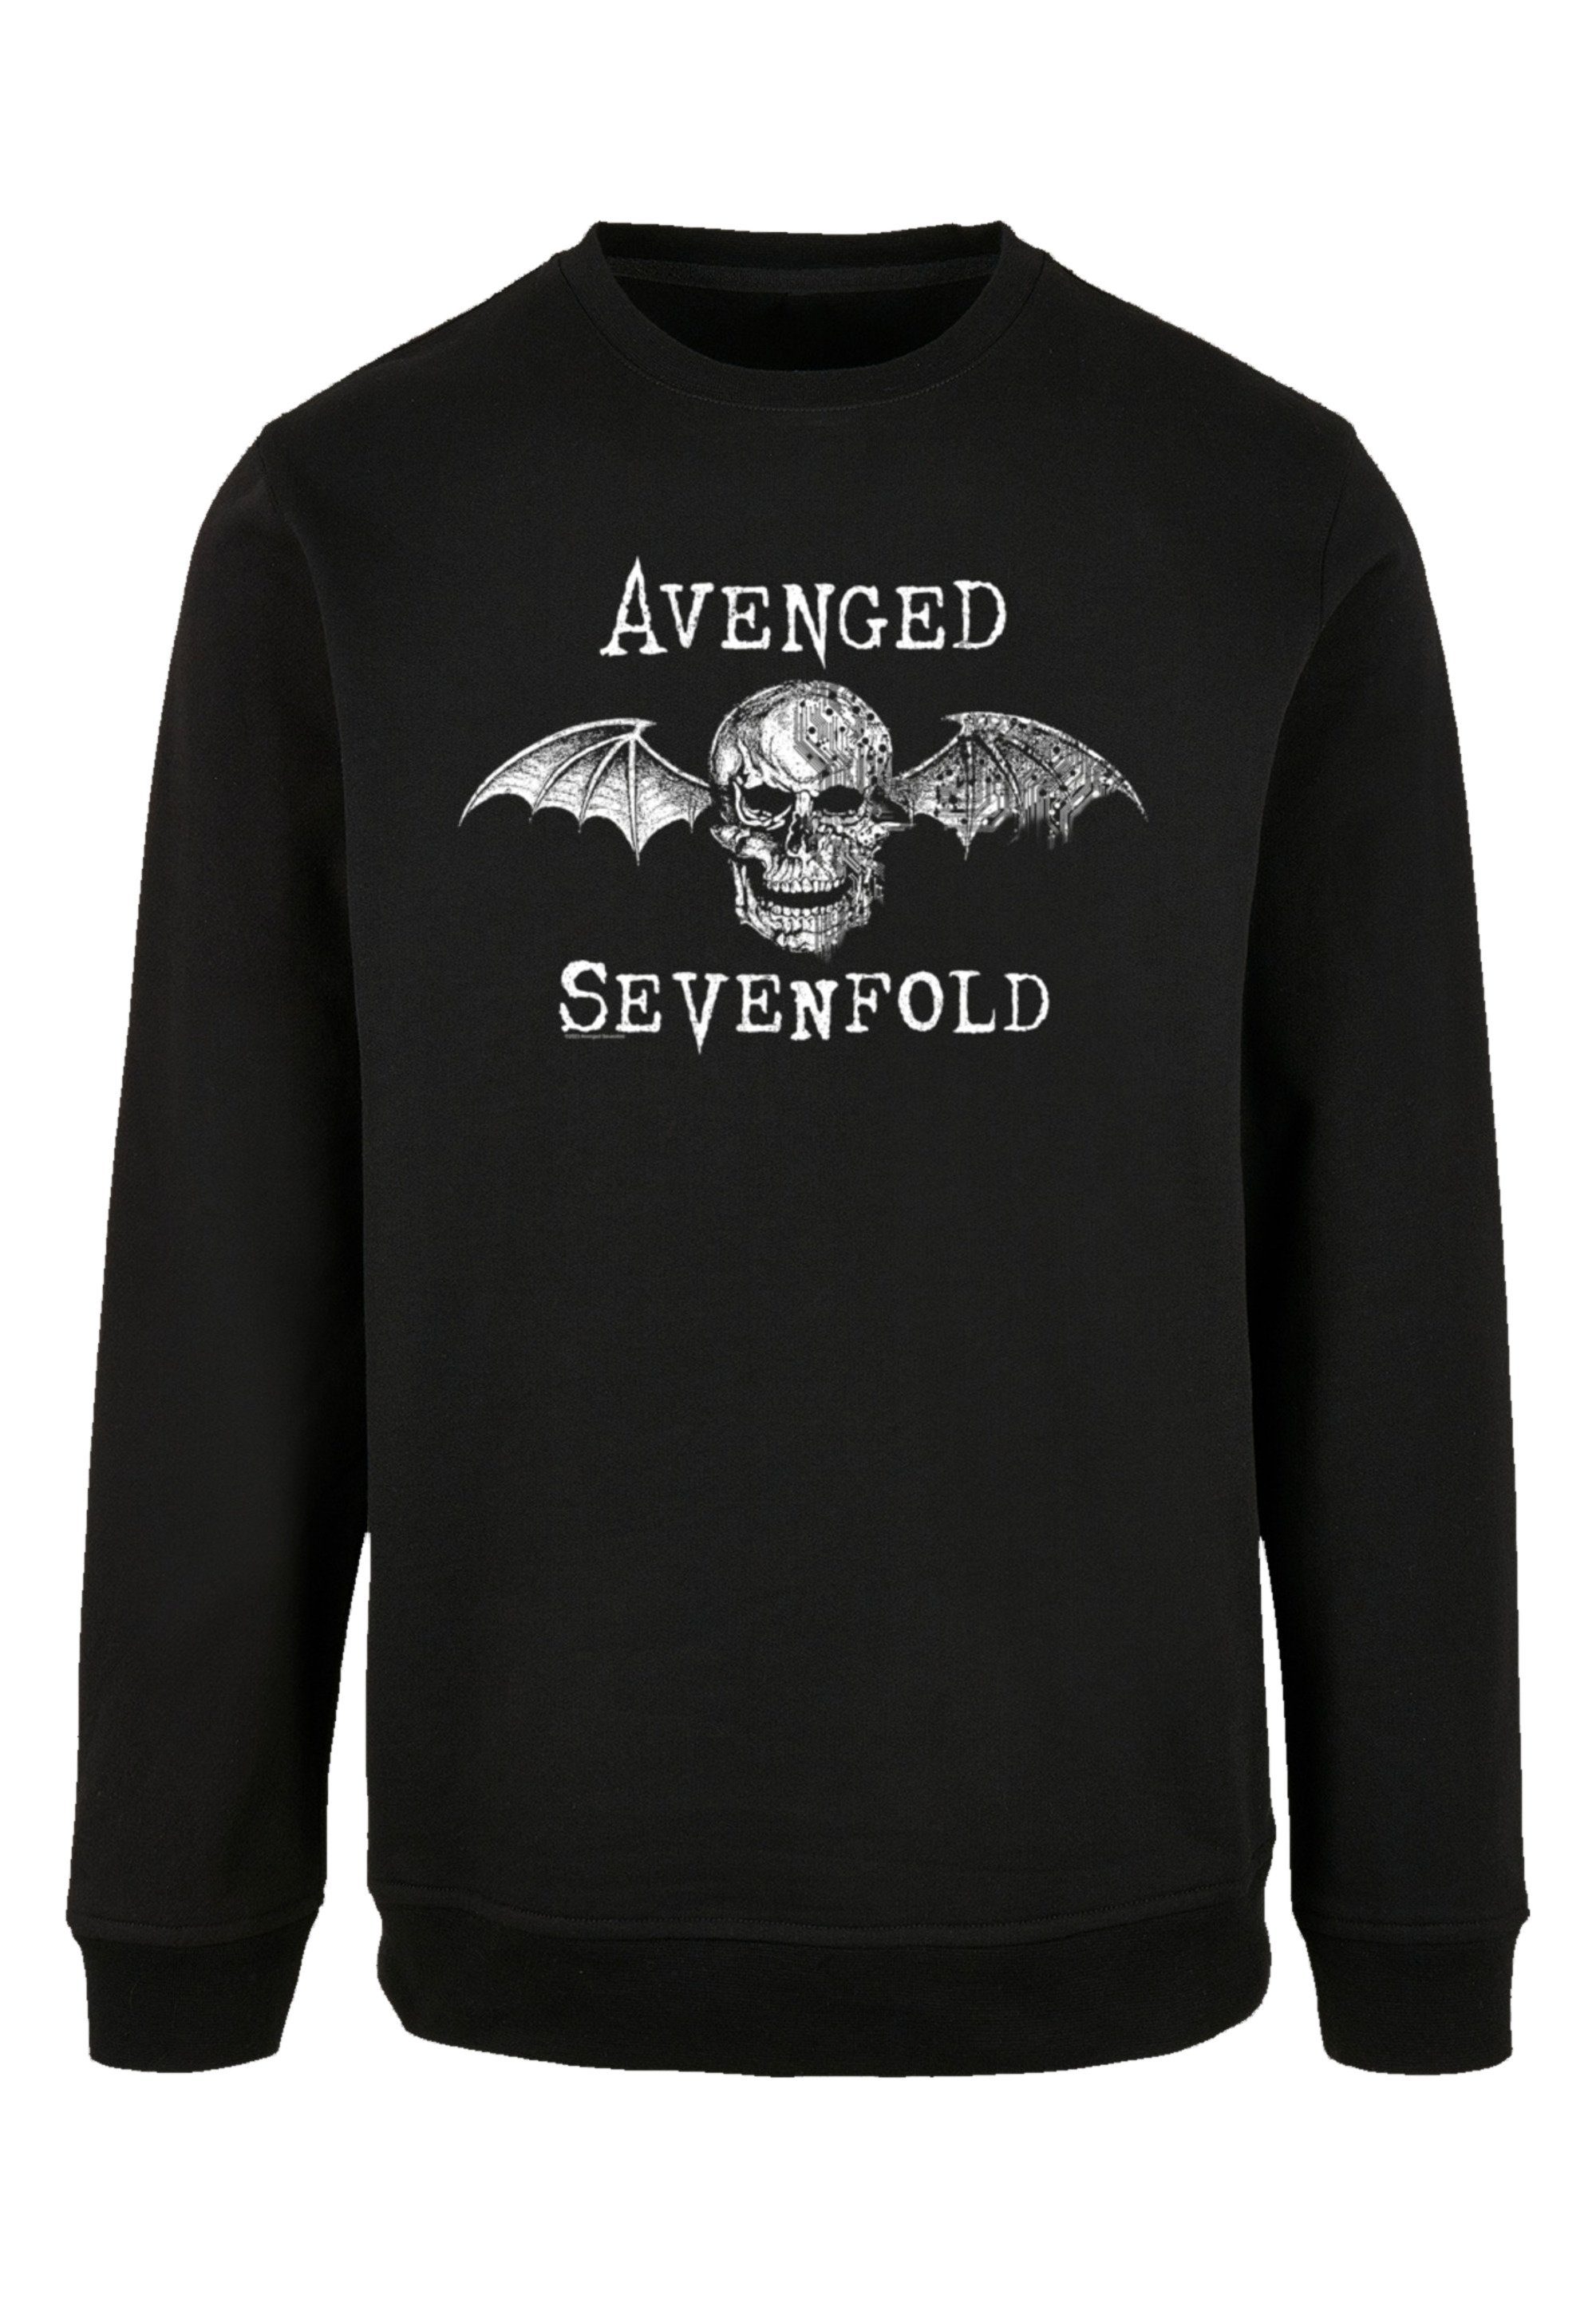 Band Sweatshirt Rock Metal Rock-Musik Qualität, Cyborg F4NT4STIC Bat Premium Sevenfold Avenged Band,